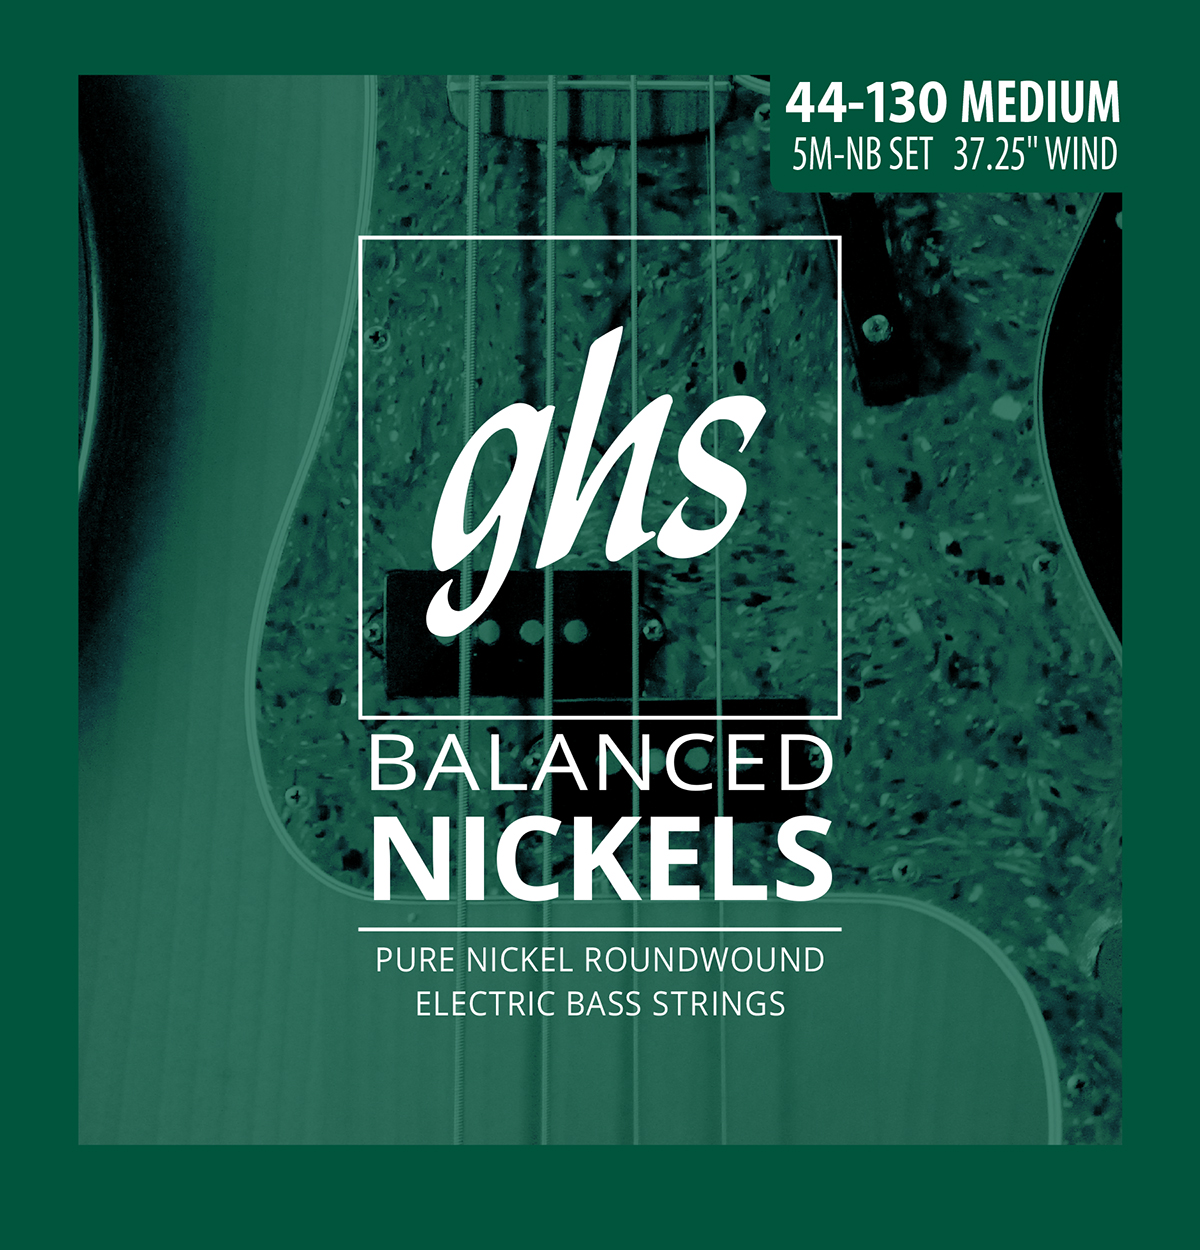 GHS Balanced Nickels - 5M-NB - Bass String Set, 5-String, Medium, .044-.130